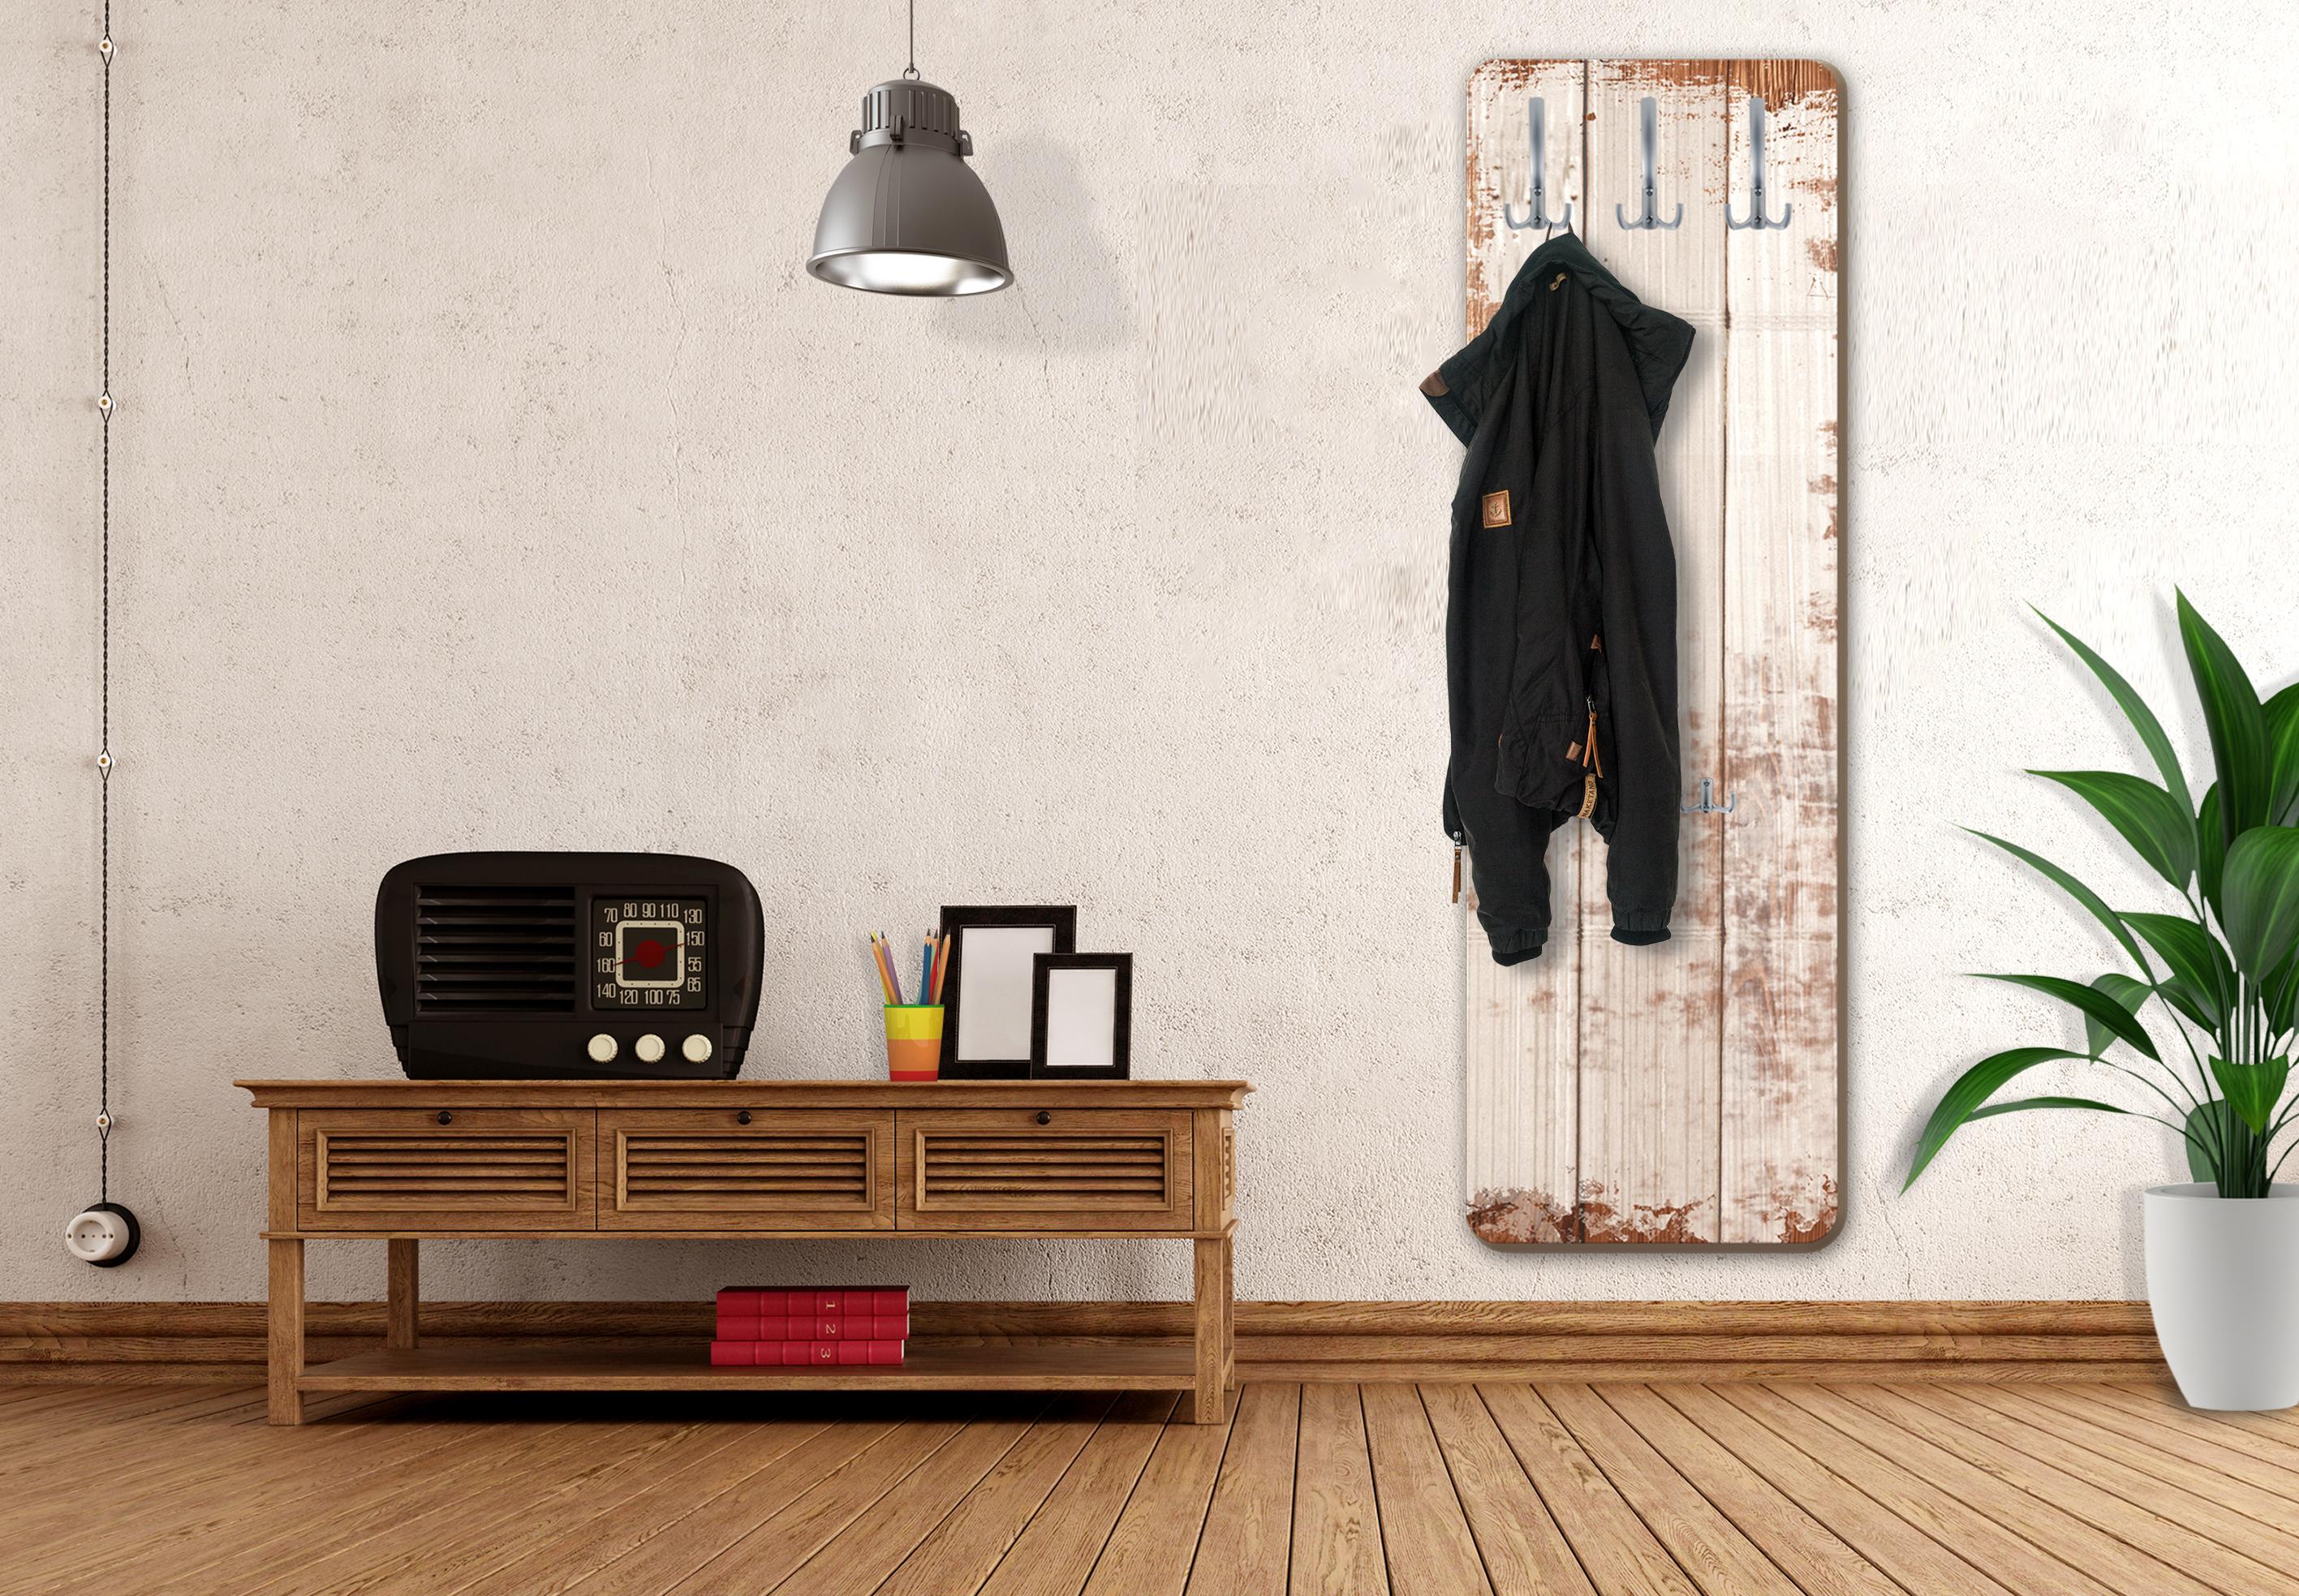 Garderobe Shabby Board #shabbychic #garderobe #fluraccessoire ©wall-art.de